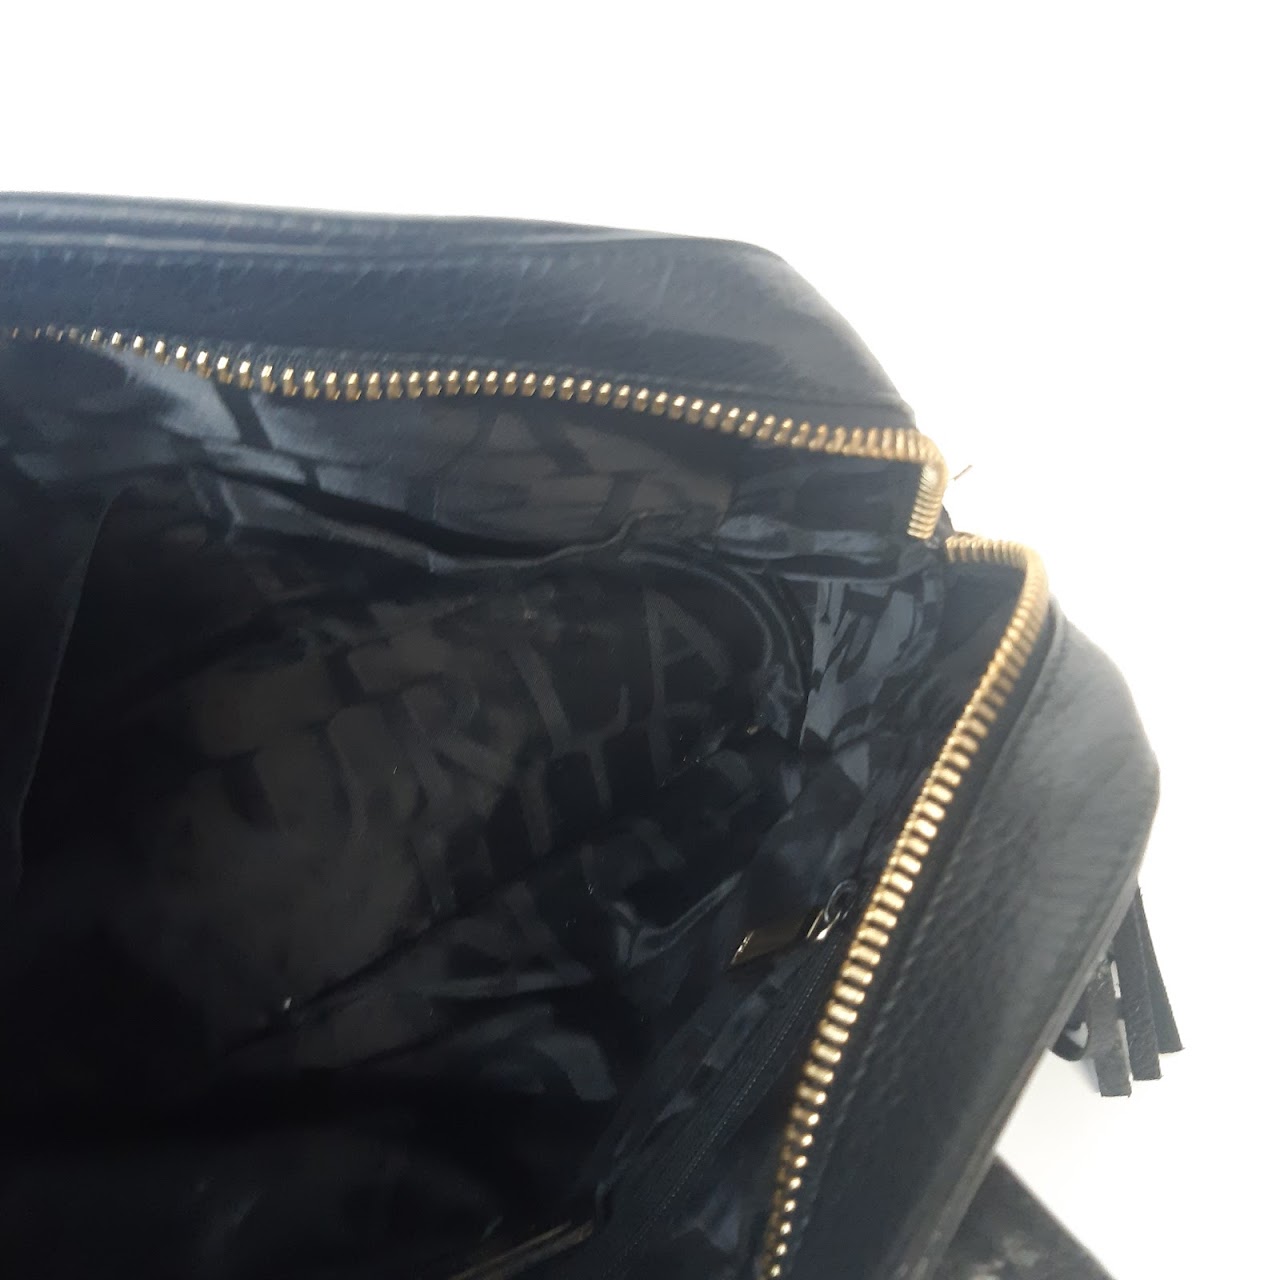 Furla Black Leather Crossbody Bag